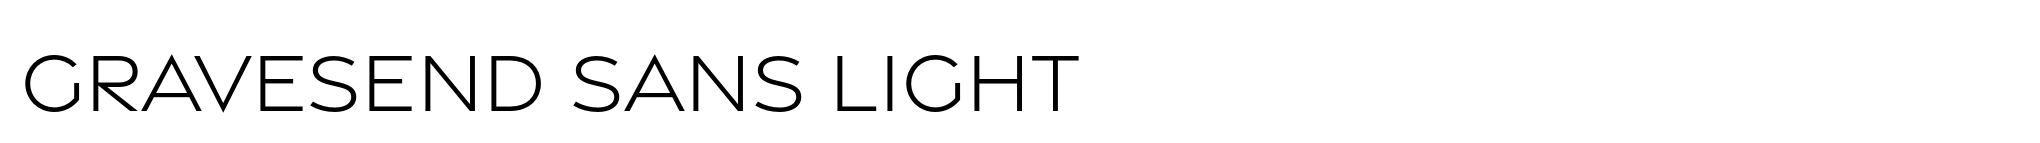 Gravesend Sans Light image